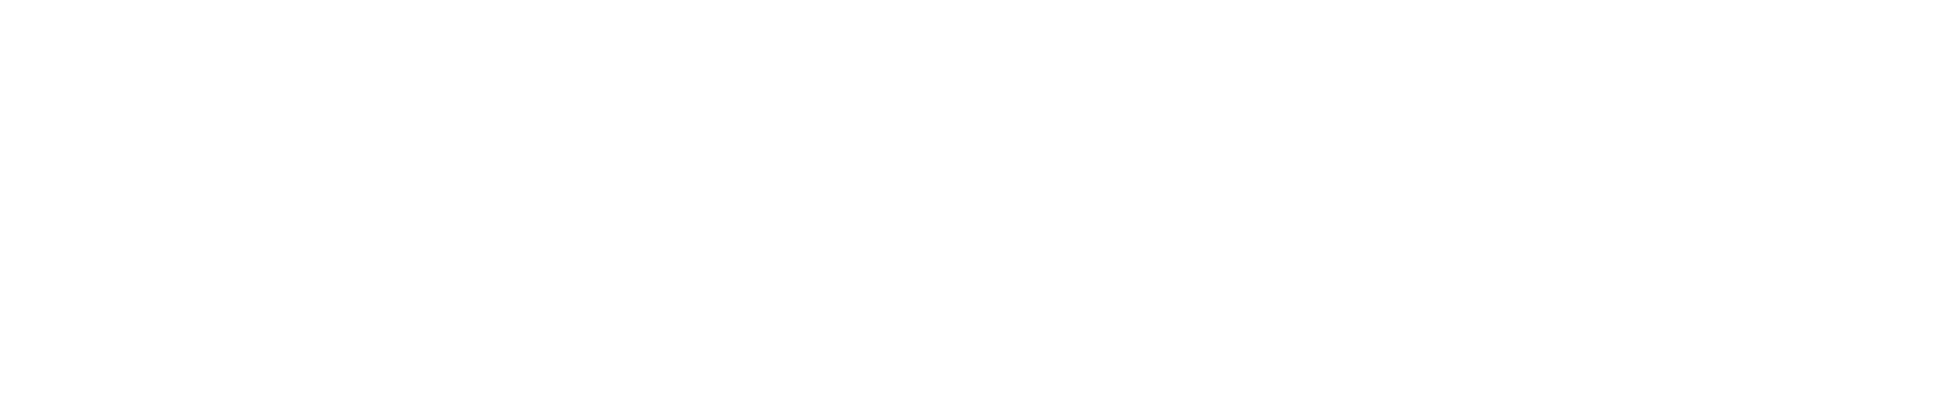 泓雨專業印刷 HUNG YU TECHNOLOGY PRINTING